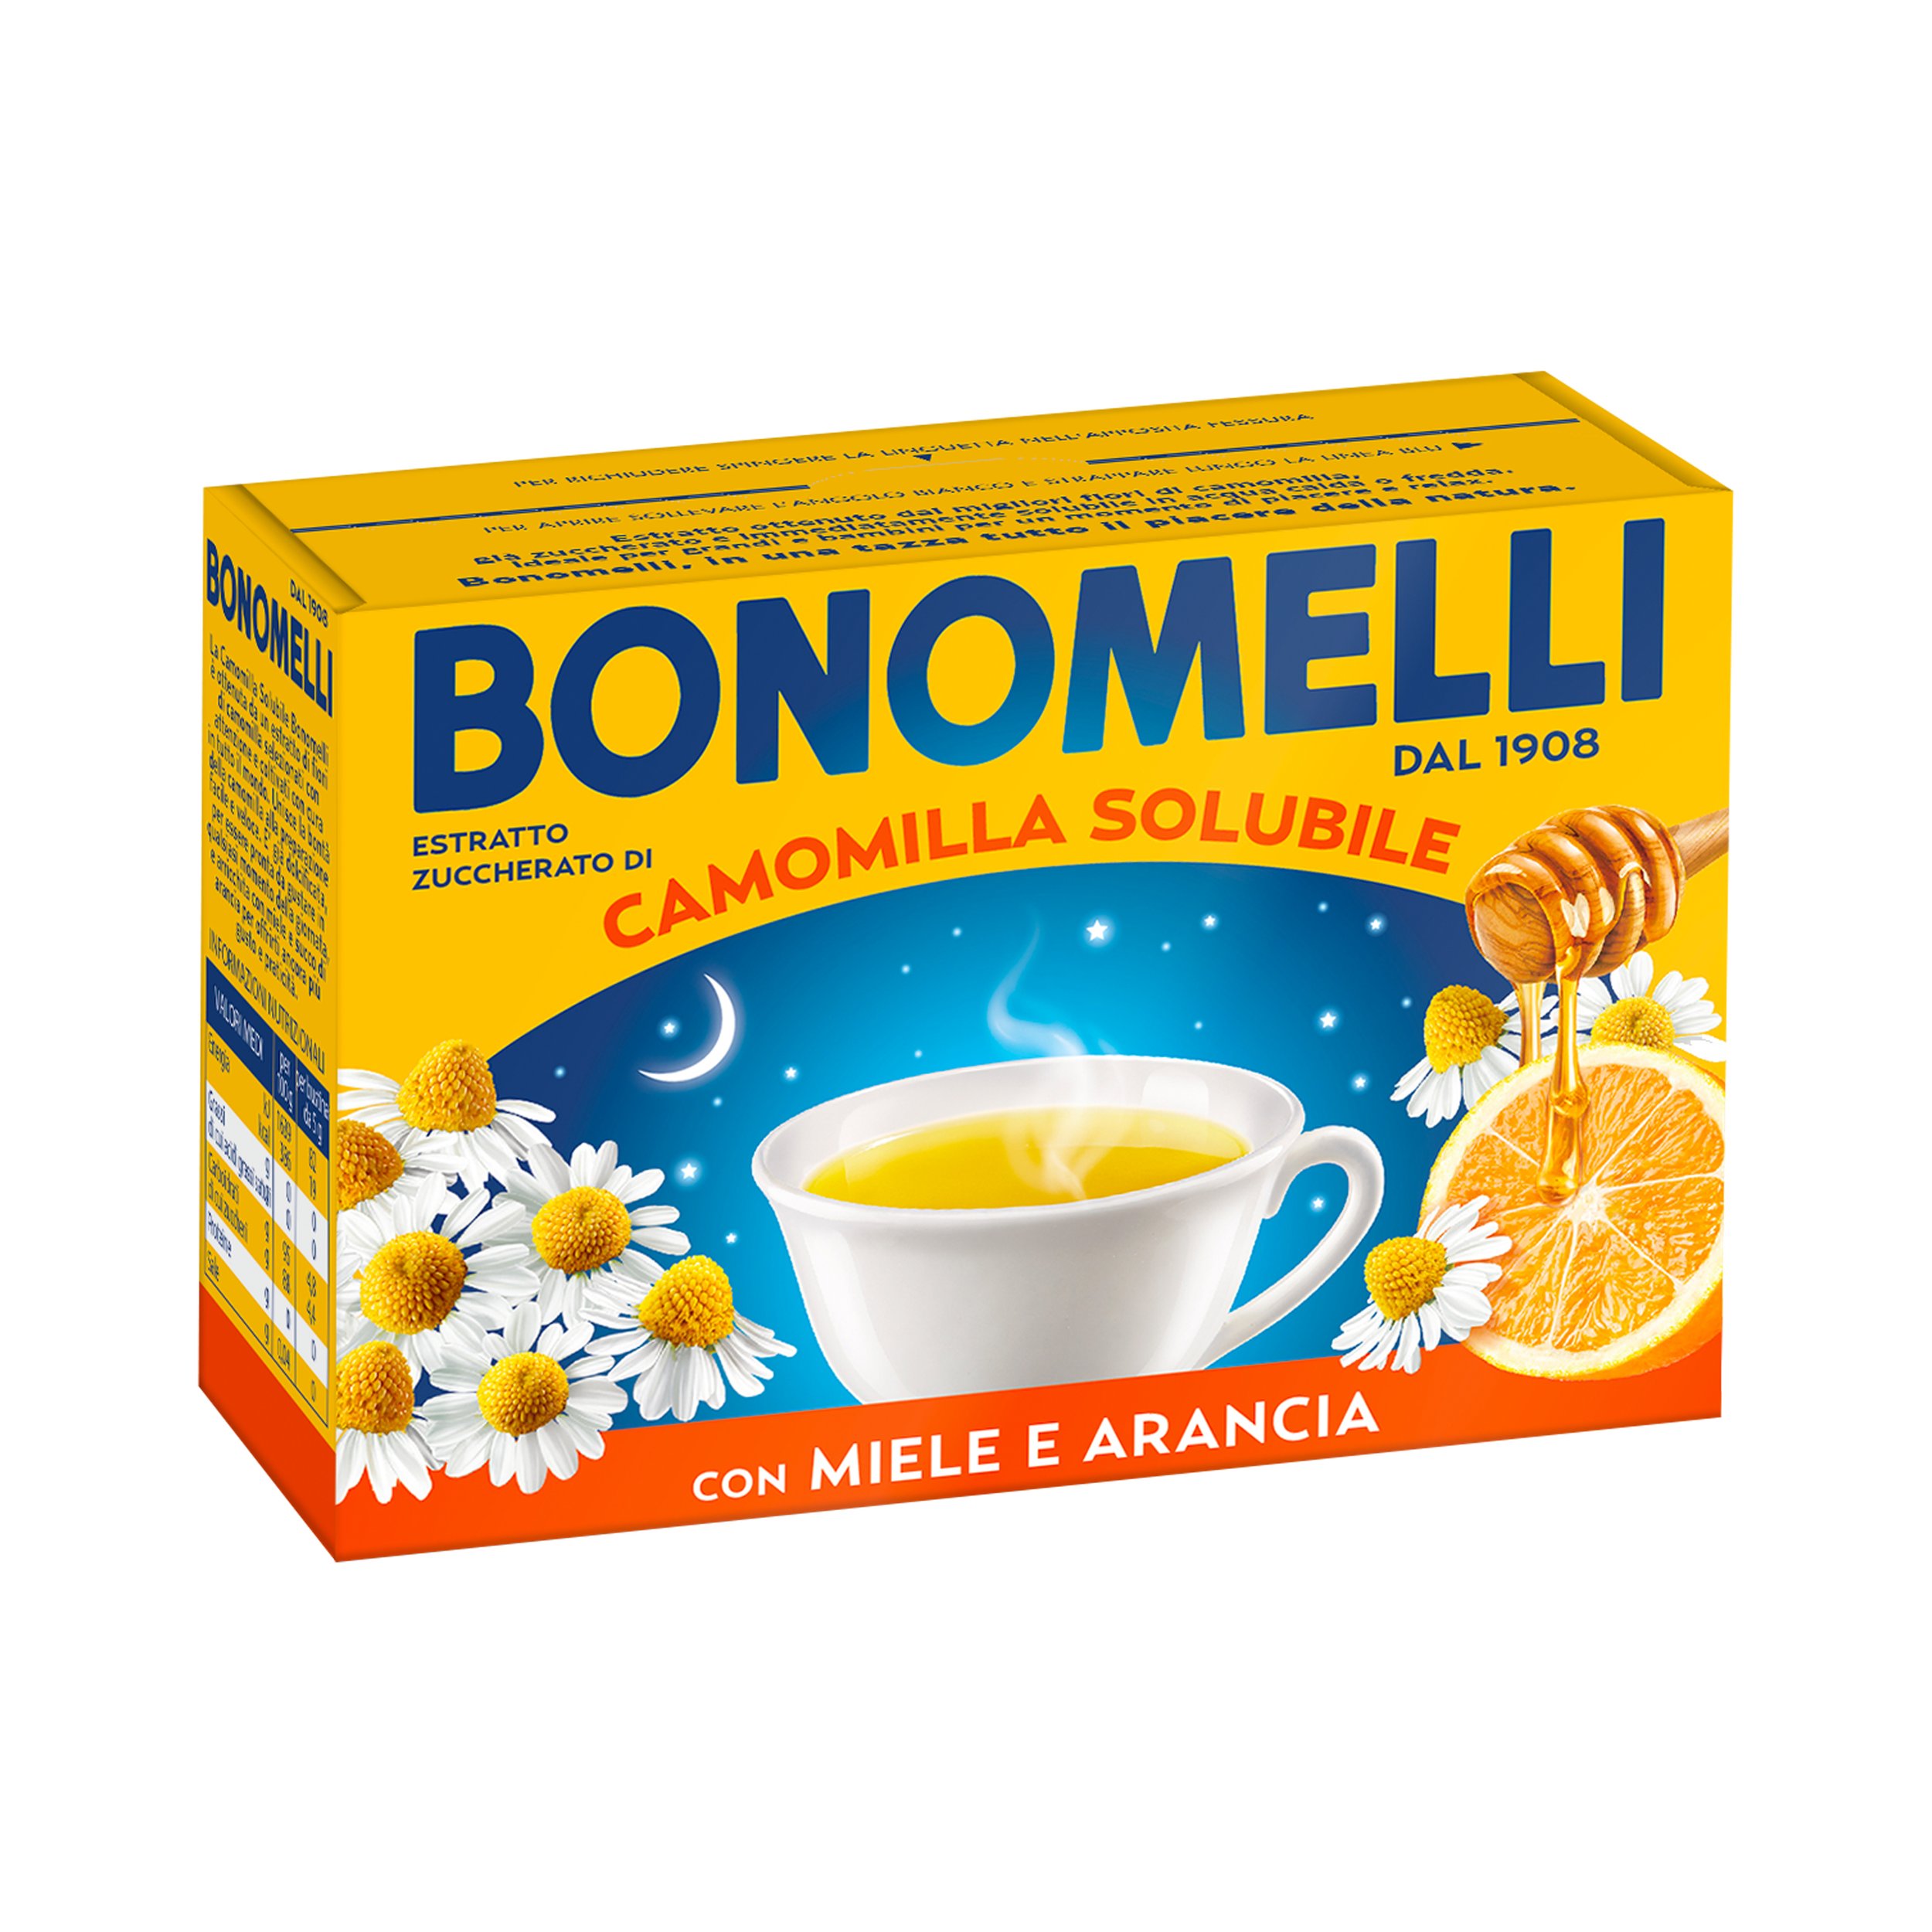 Bonomelli - BO32718.jpg